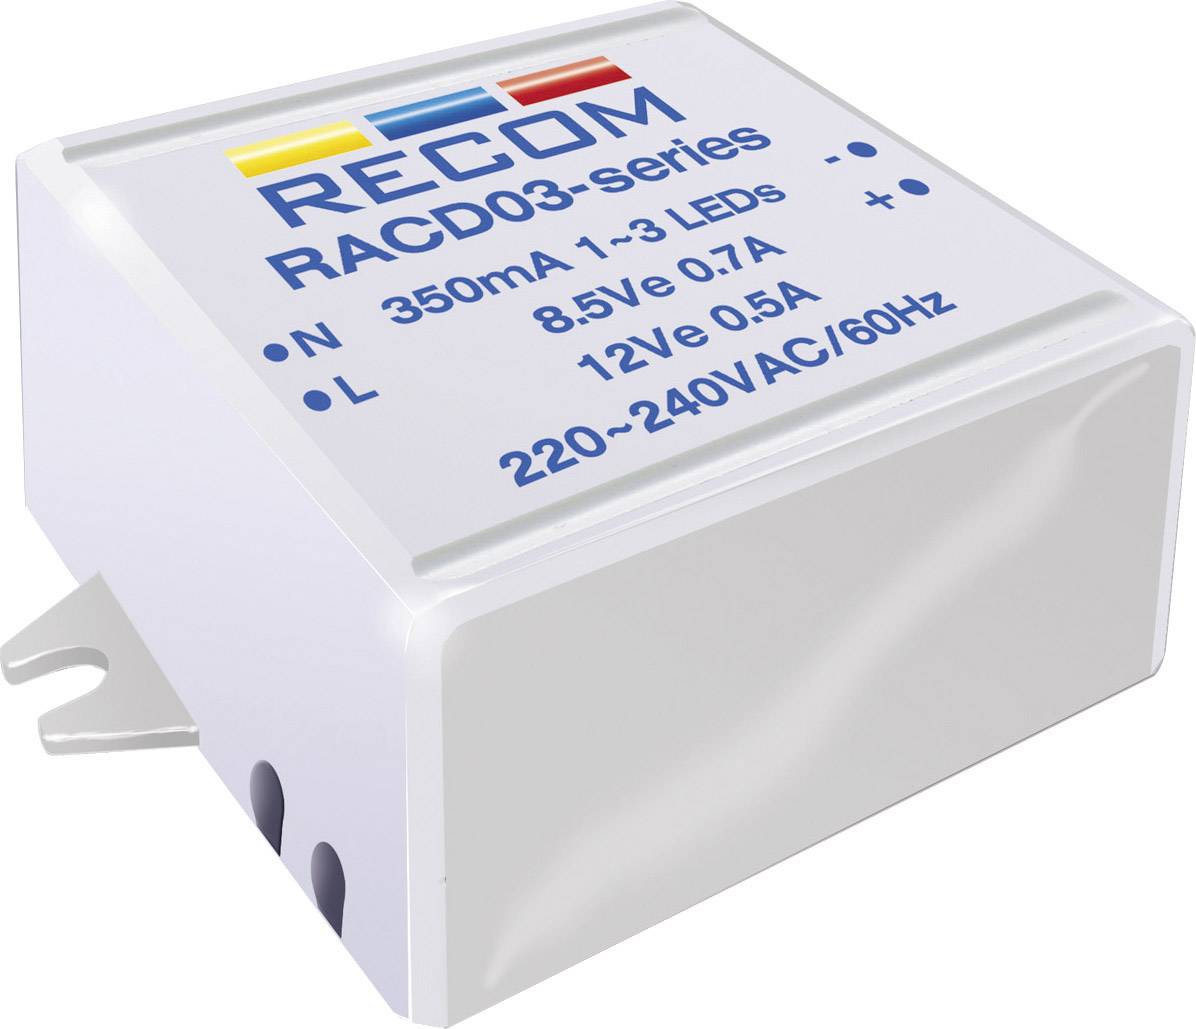 RECOM LED-Konstantstromquelle 3 W 700 mA 4.5 V/DC Recom Lighting RACD03-700 Betriebsspannung max.: 2